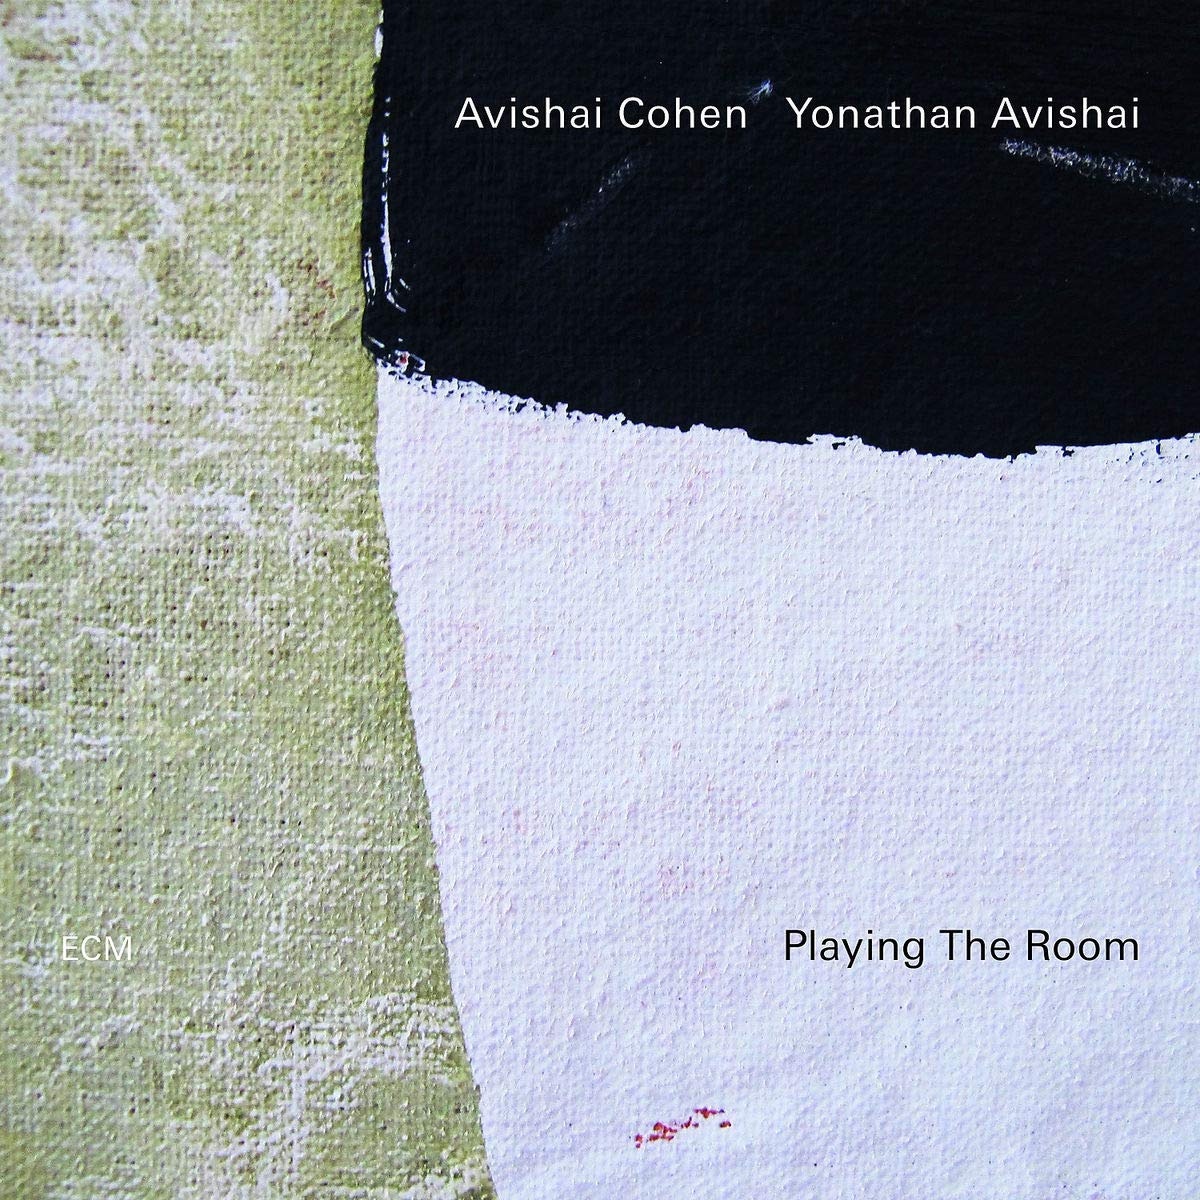 Avishai Cohen, Yonathan Avishai - Playing The Room / Авишай Коэн, Йонатан Авишай - Playing The Room